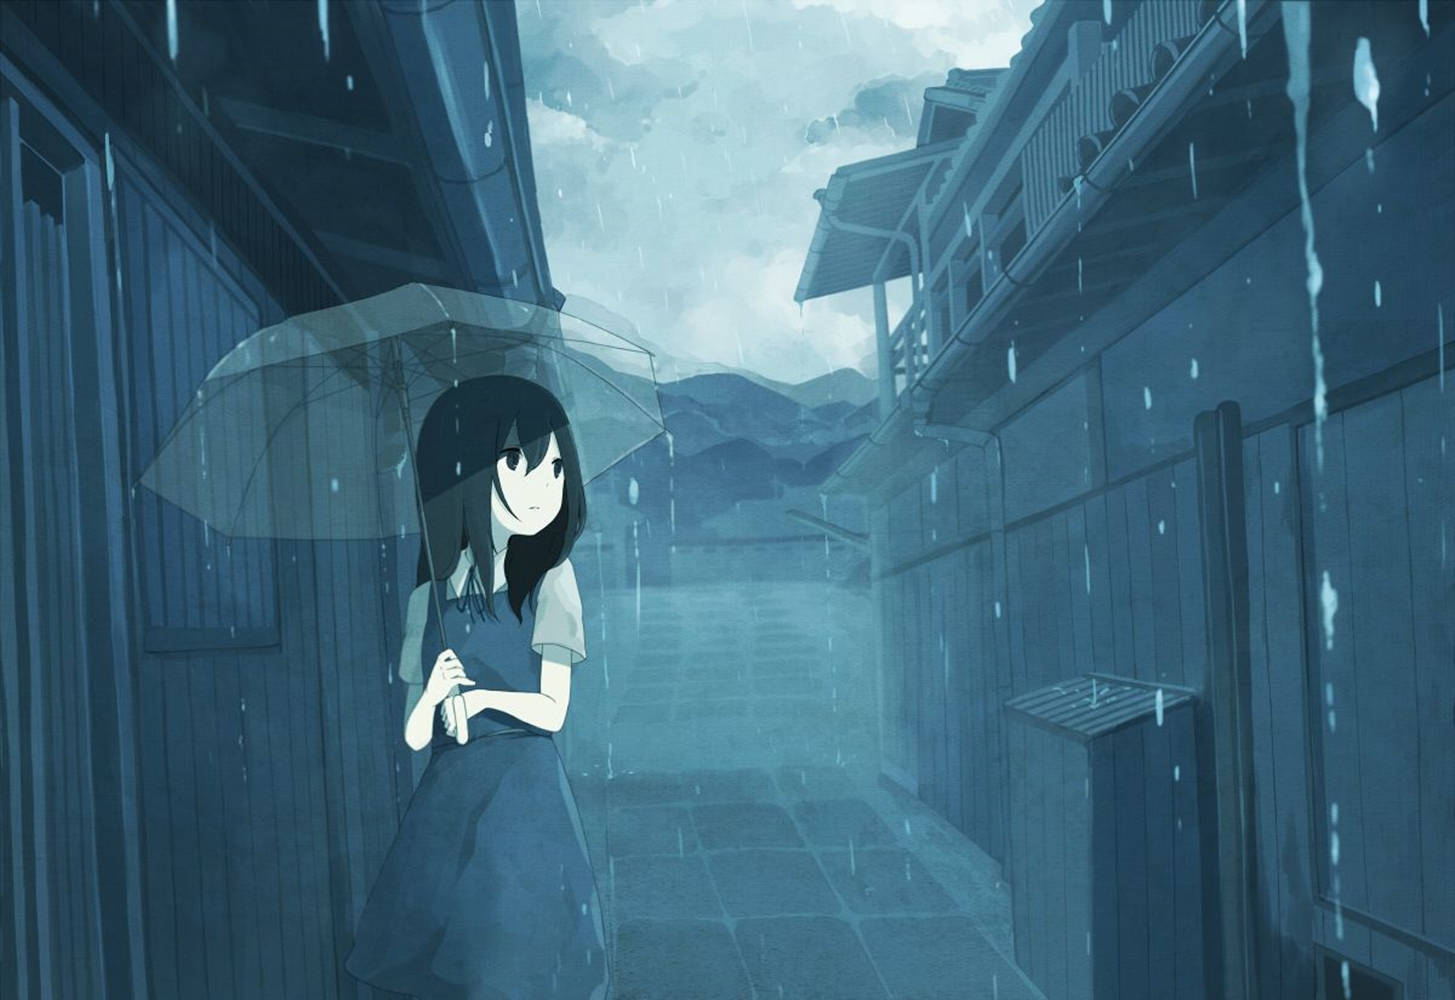 Anime Girl Sad Alone With Umbrella In Rain